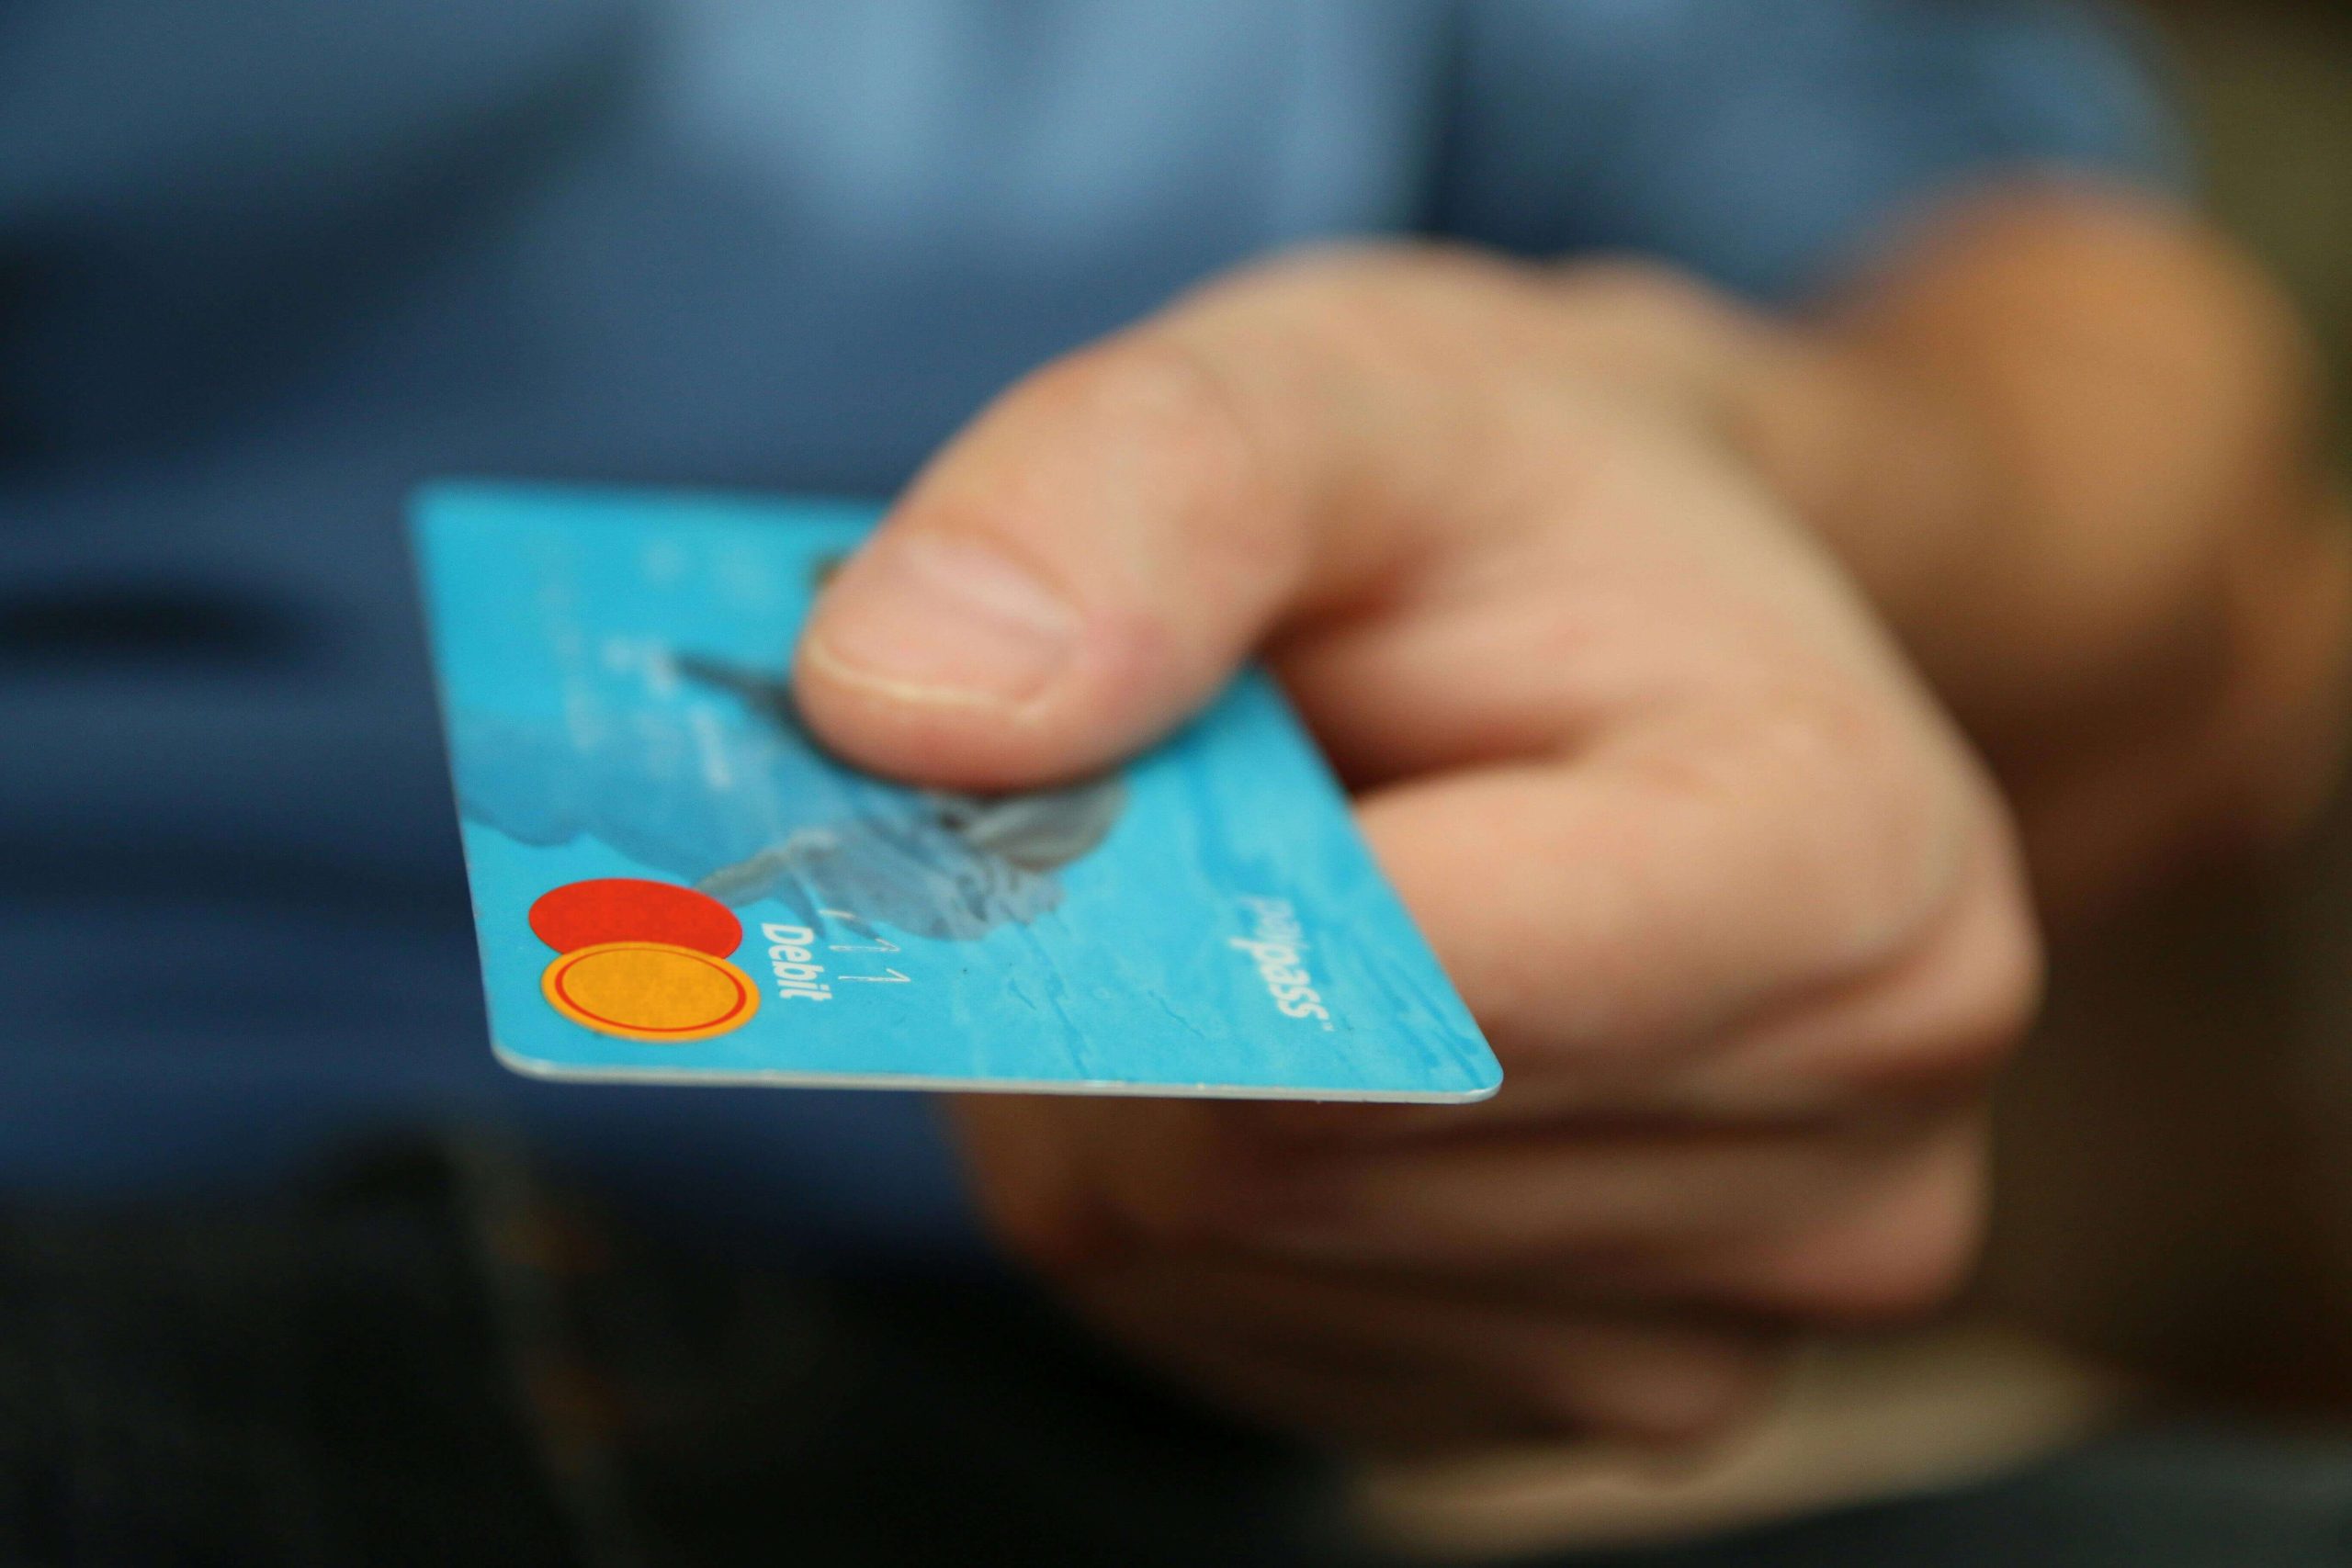 image of a debit card close up